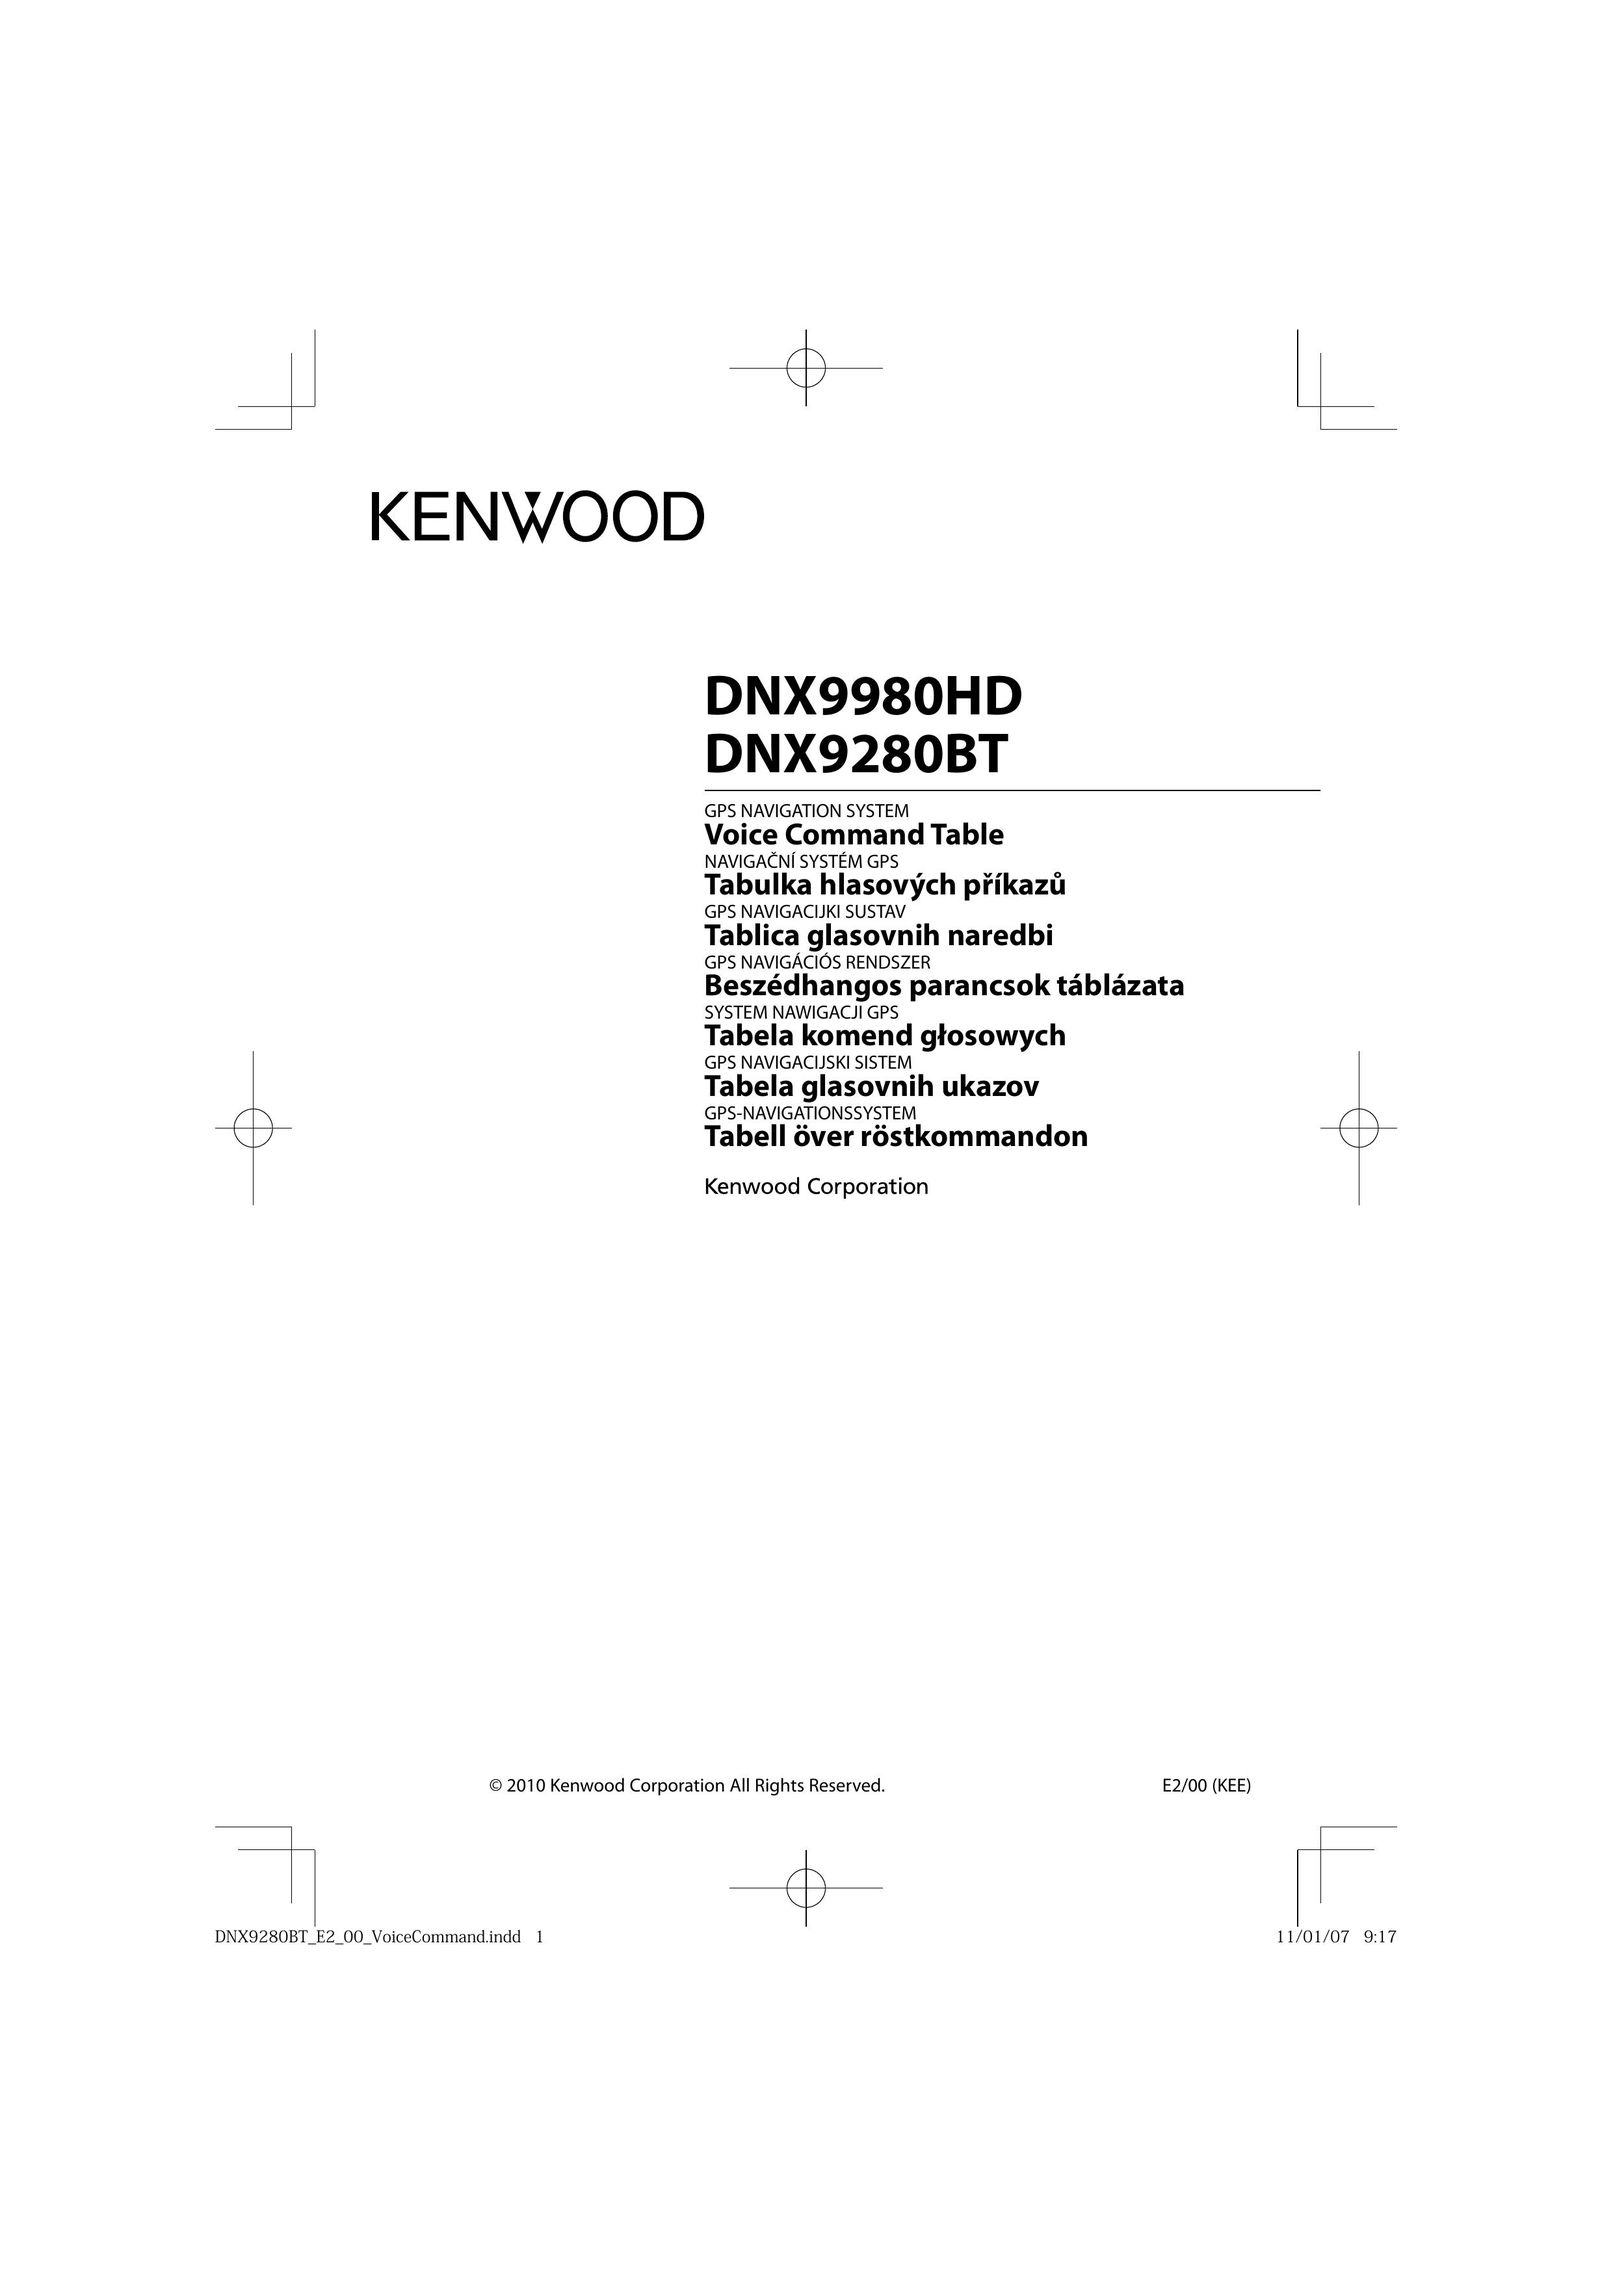 Kenwood DNX9980HD Car Amplifier User Manual